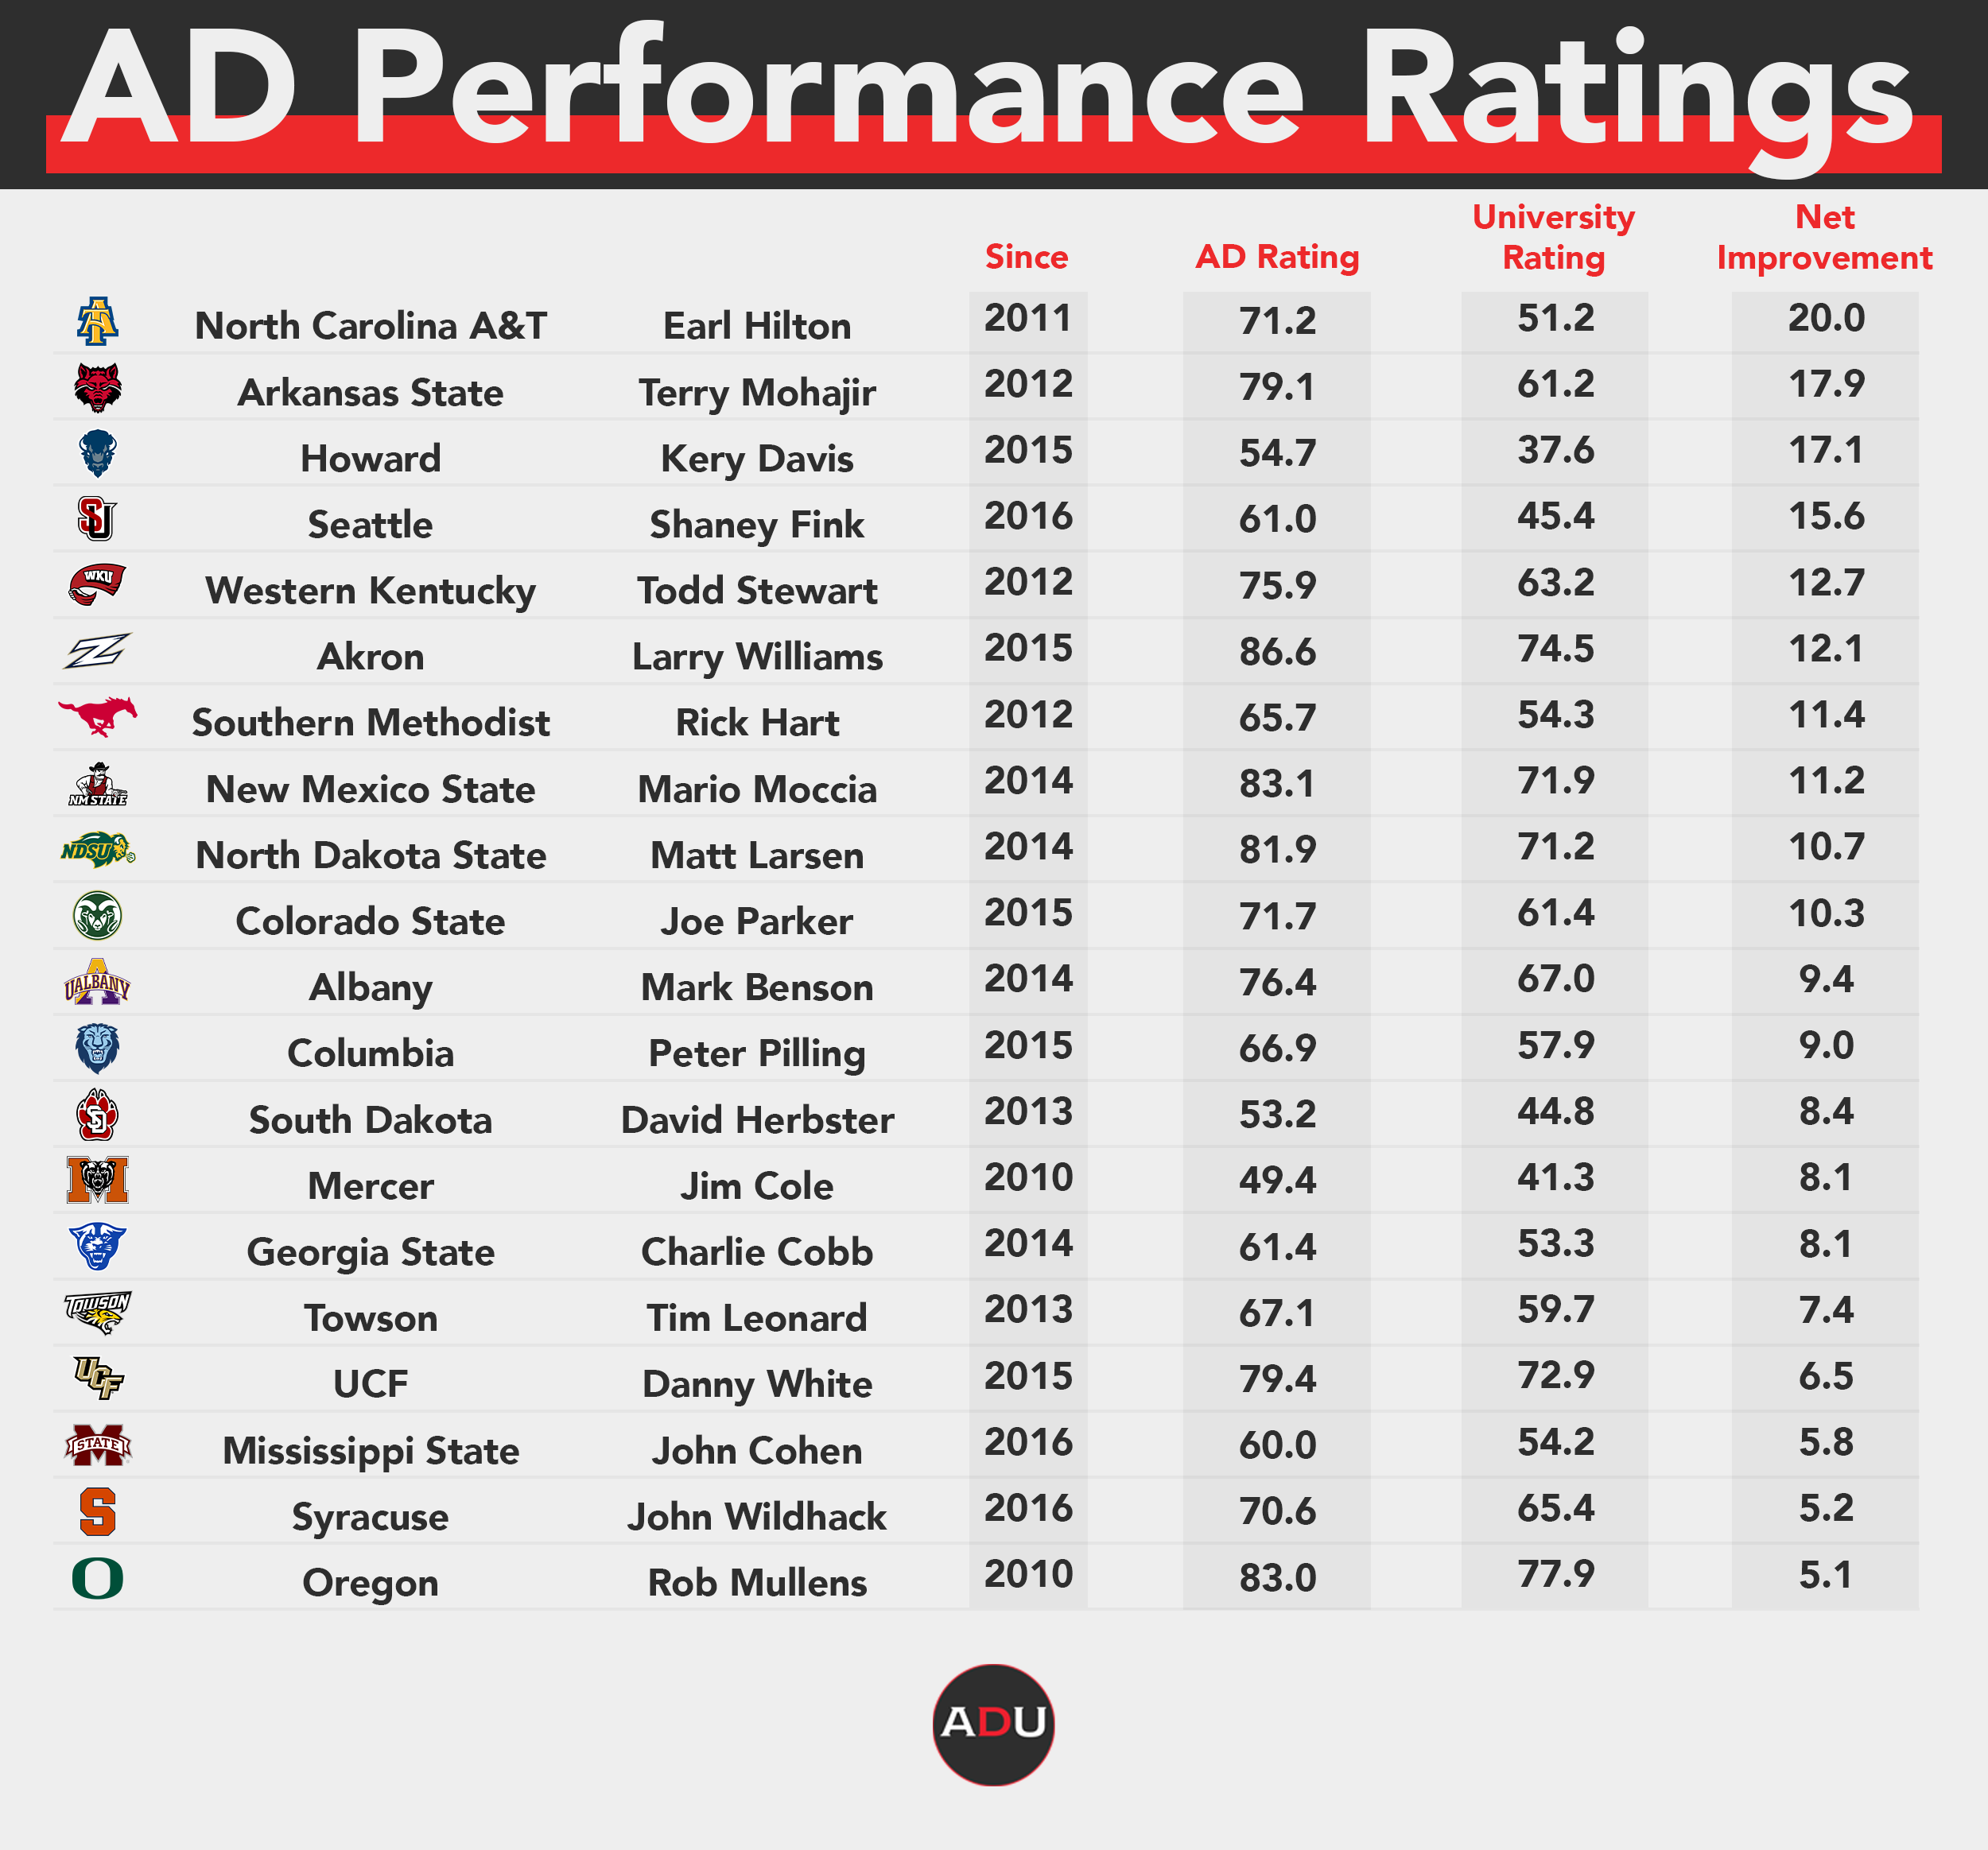 https://athleticdirectoru.com/wp-content/uploads/2020/03/AD-Performance-Rating_Improvement.png